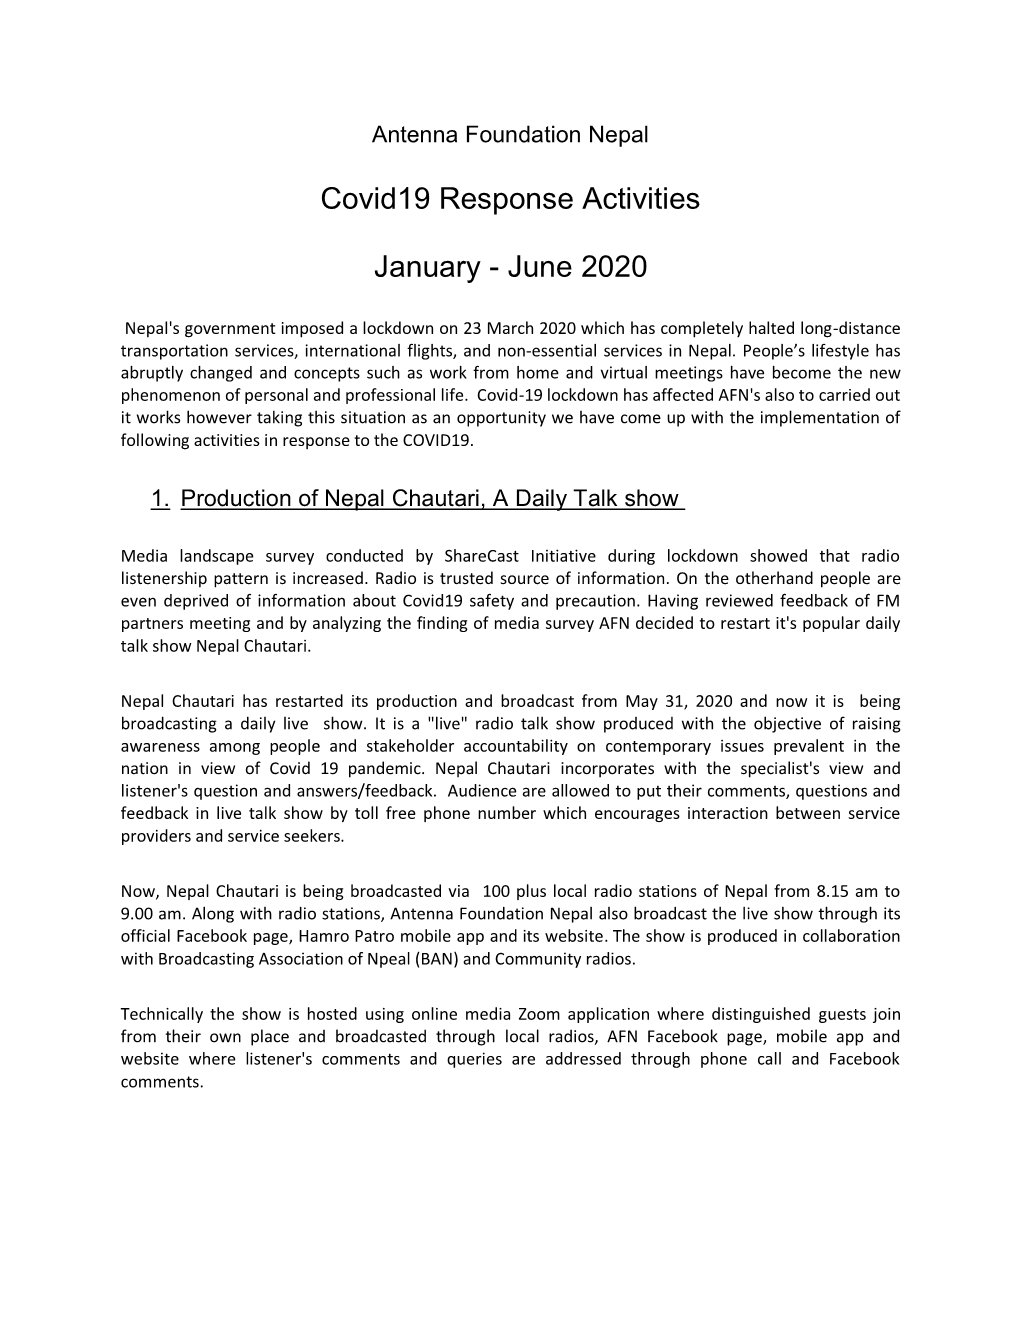 Covid19 Response Activities January